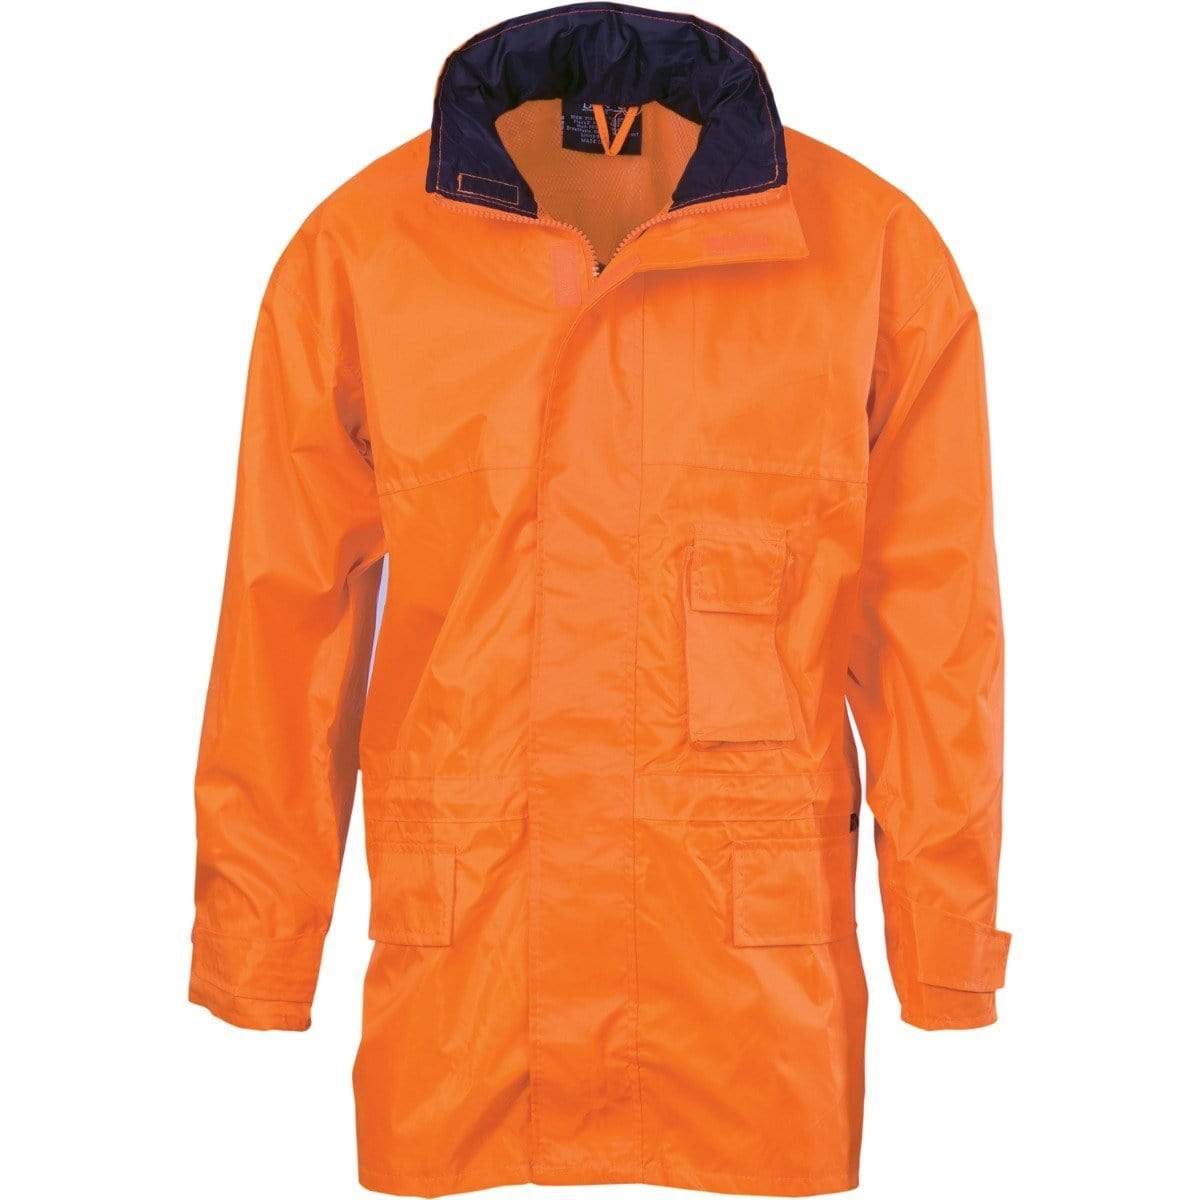 Dnc Workwear Hi-vis Breathable Rain Jacket - 3873 Work Wear DNC Workwear Orange S 